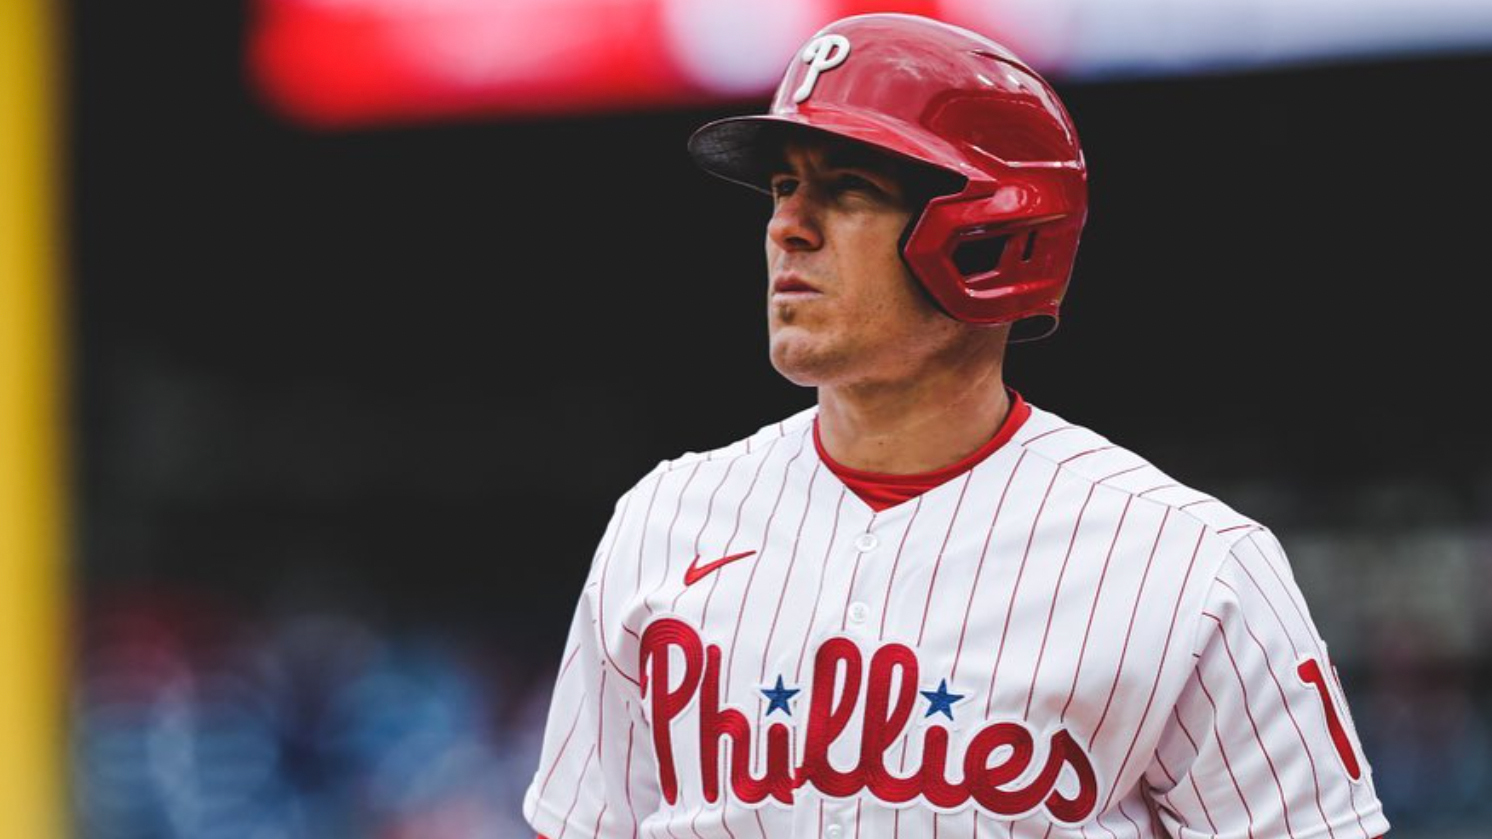 Phillies' Catcher J.T. Realmuto Makes MLB History: 'The No. 1